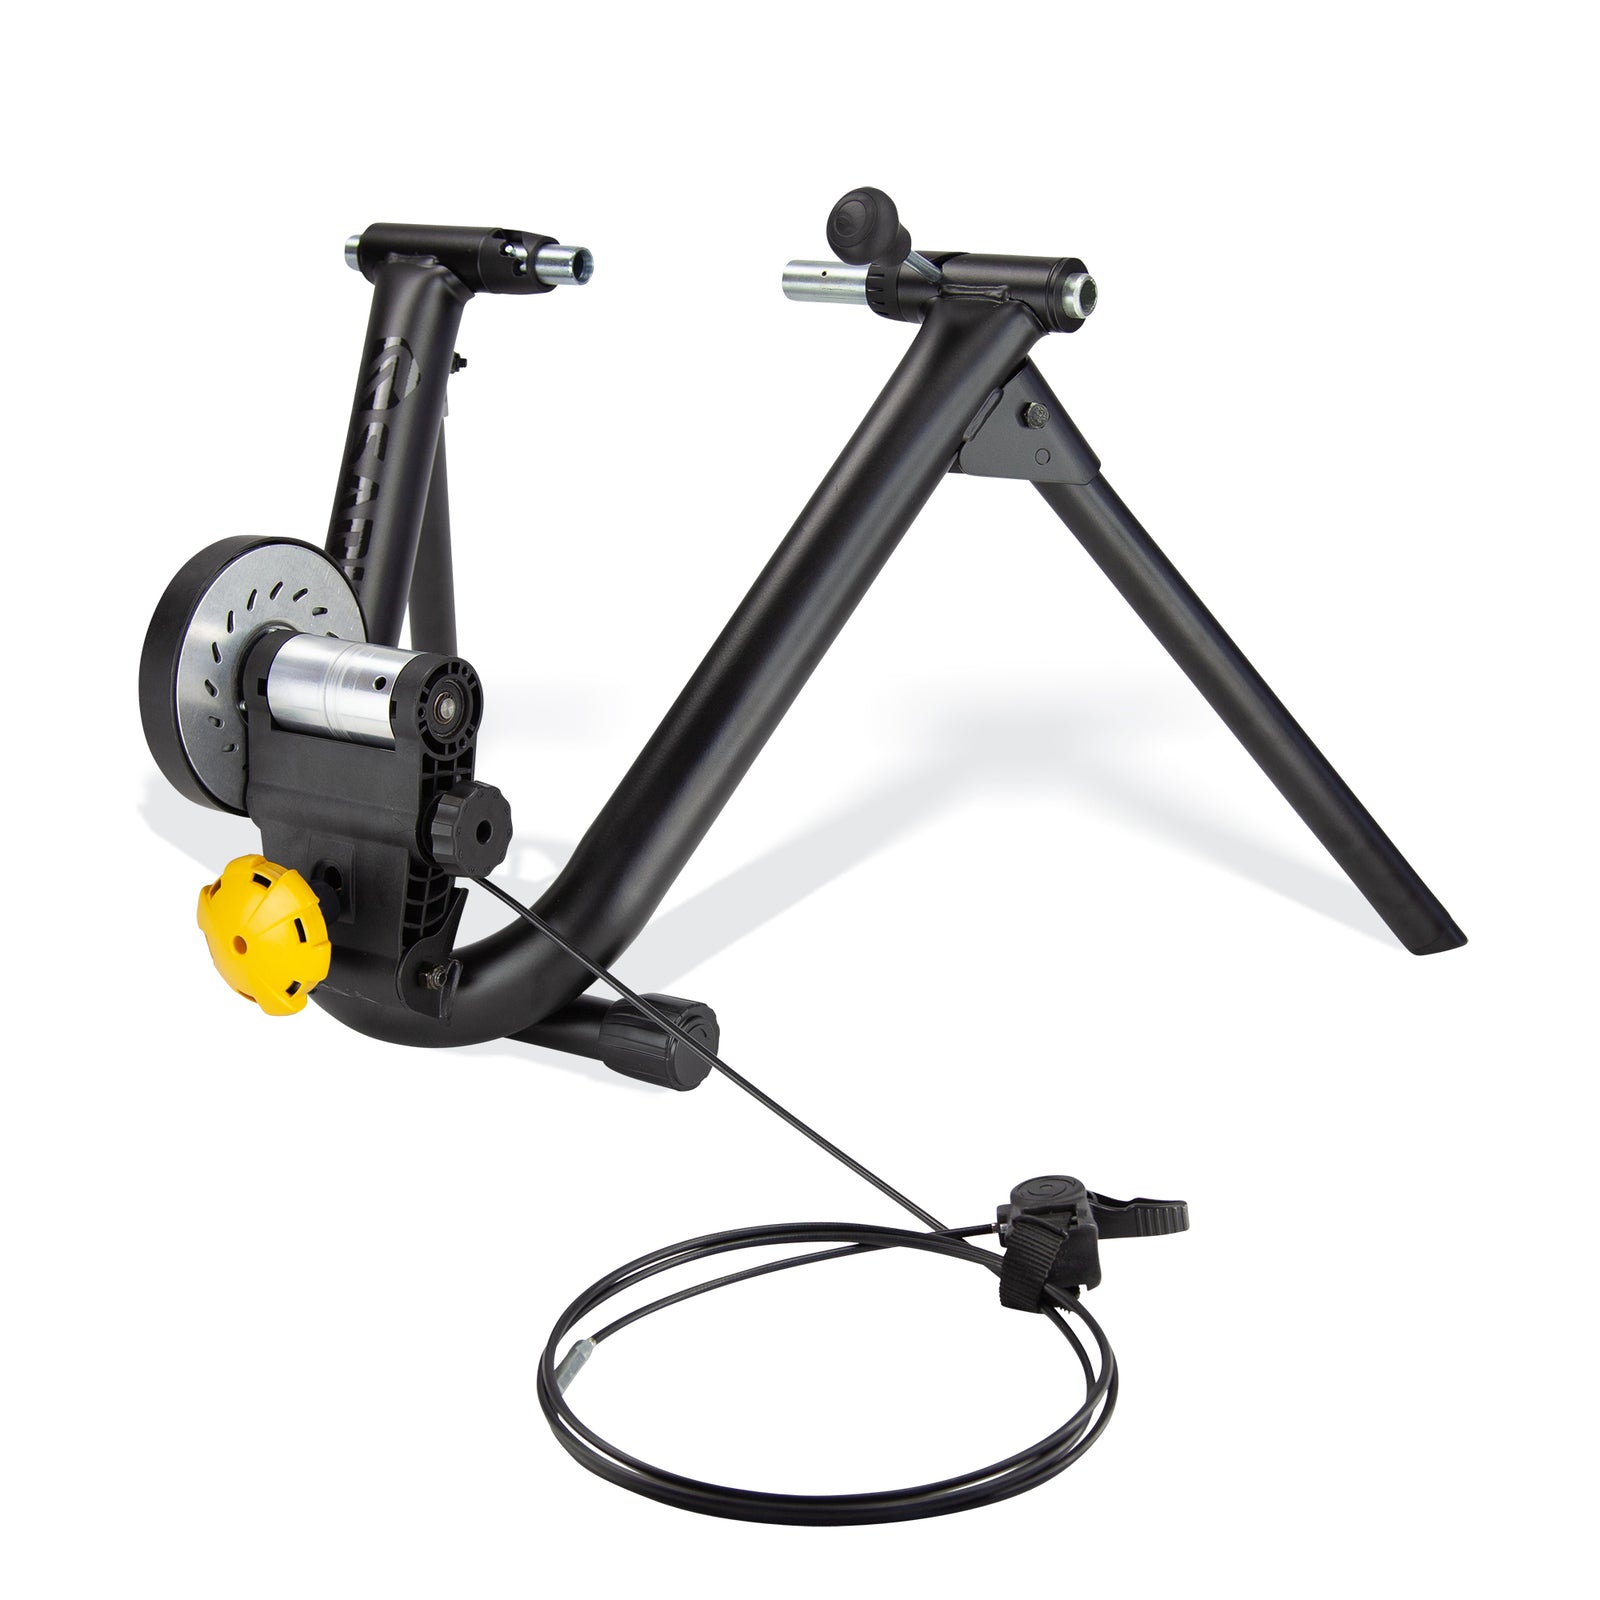 Saris Mag+ Bike Trainer Stand, Foldable Magnetic Resistance Indoor Bike Trainer, Black - image 1 of 7